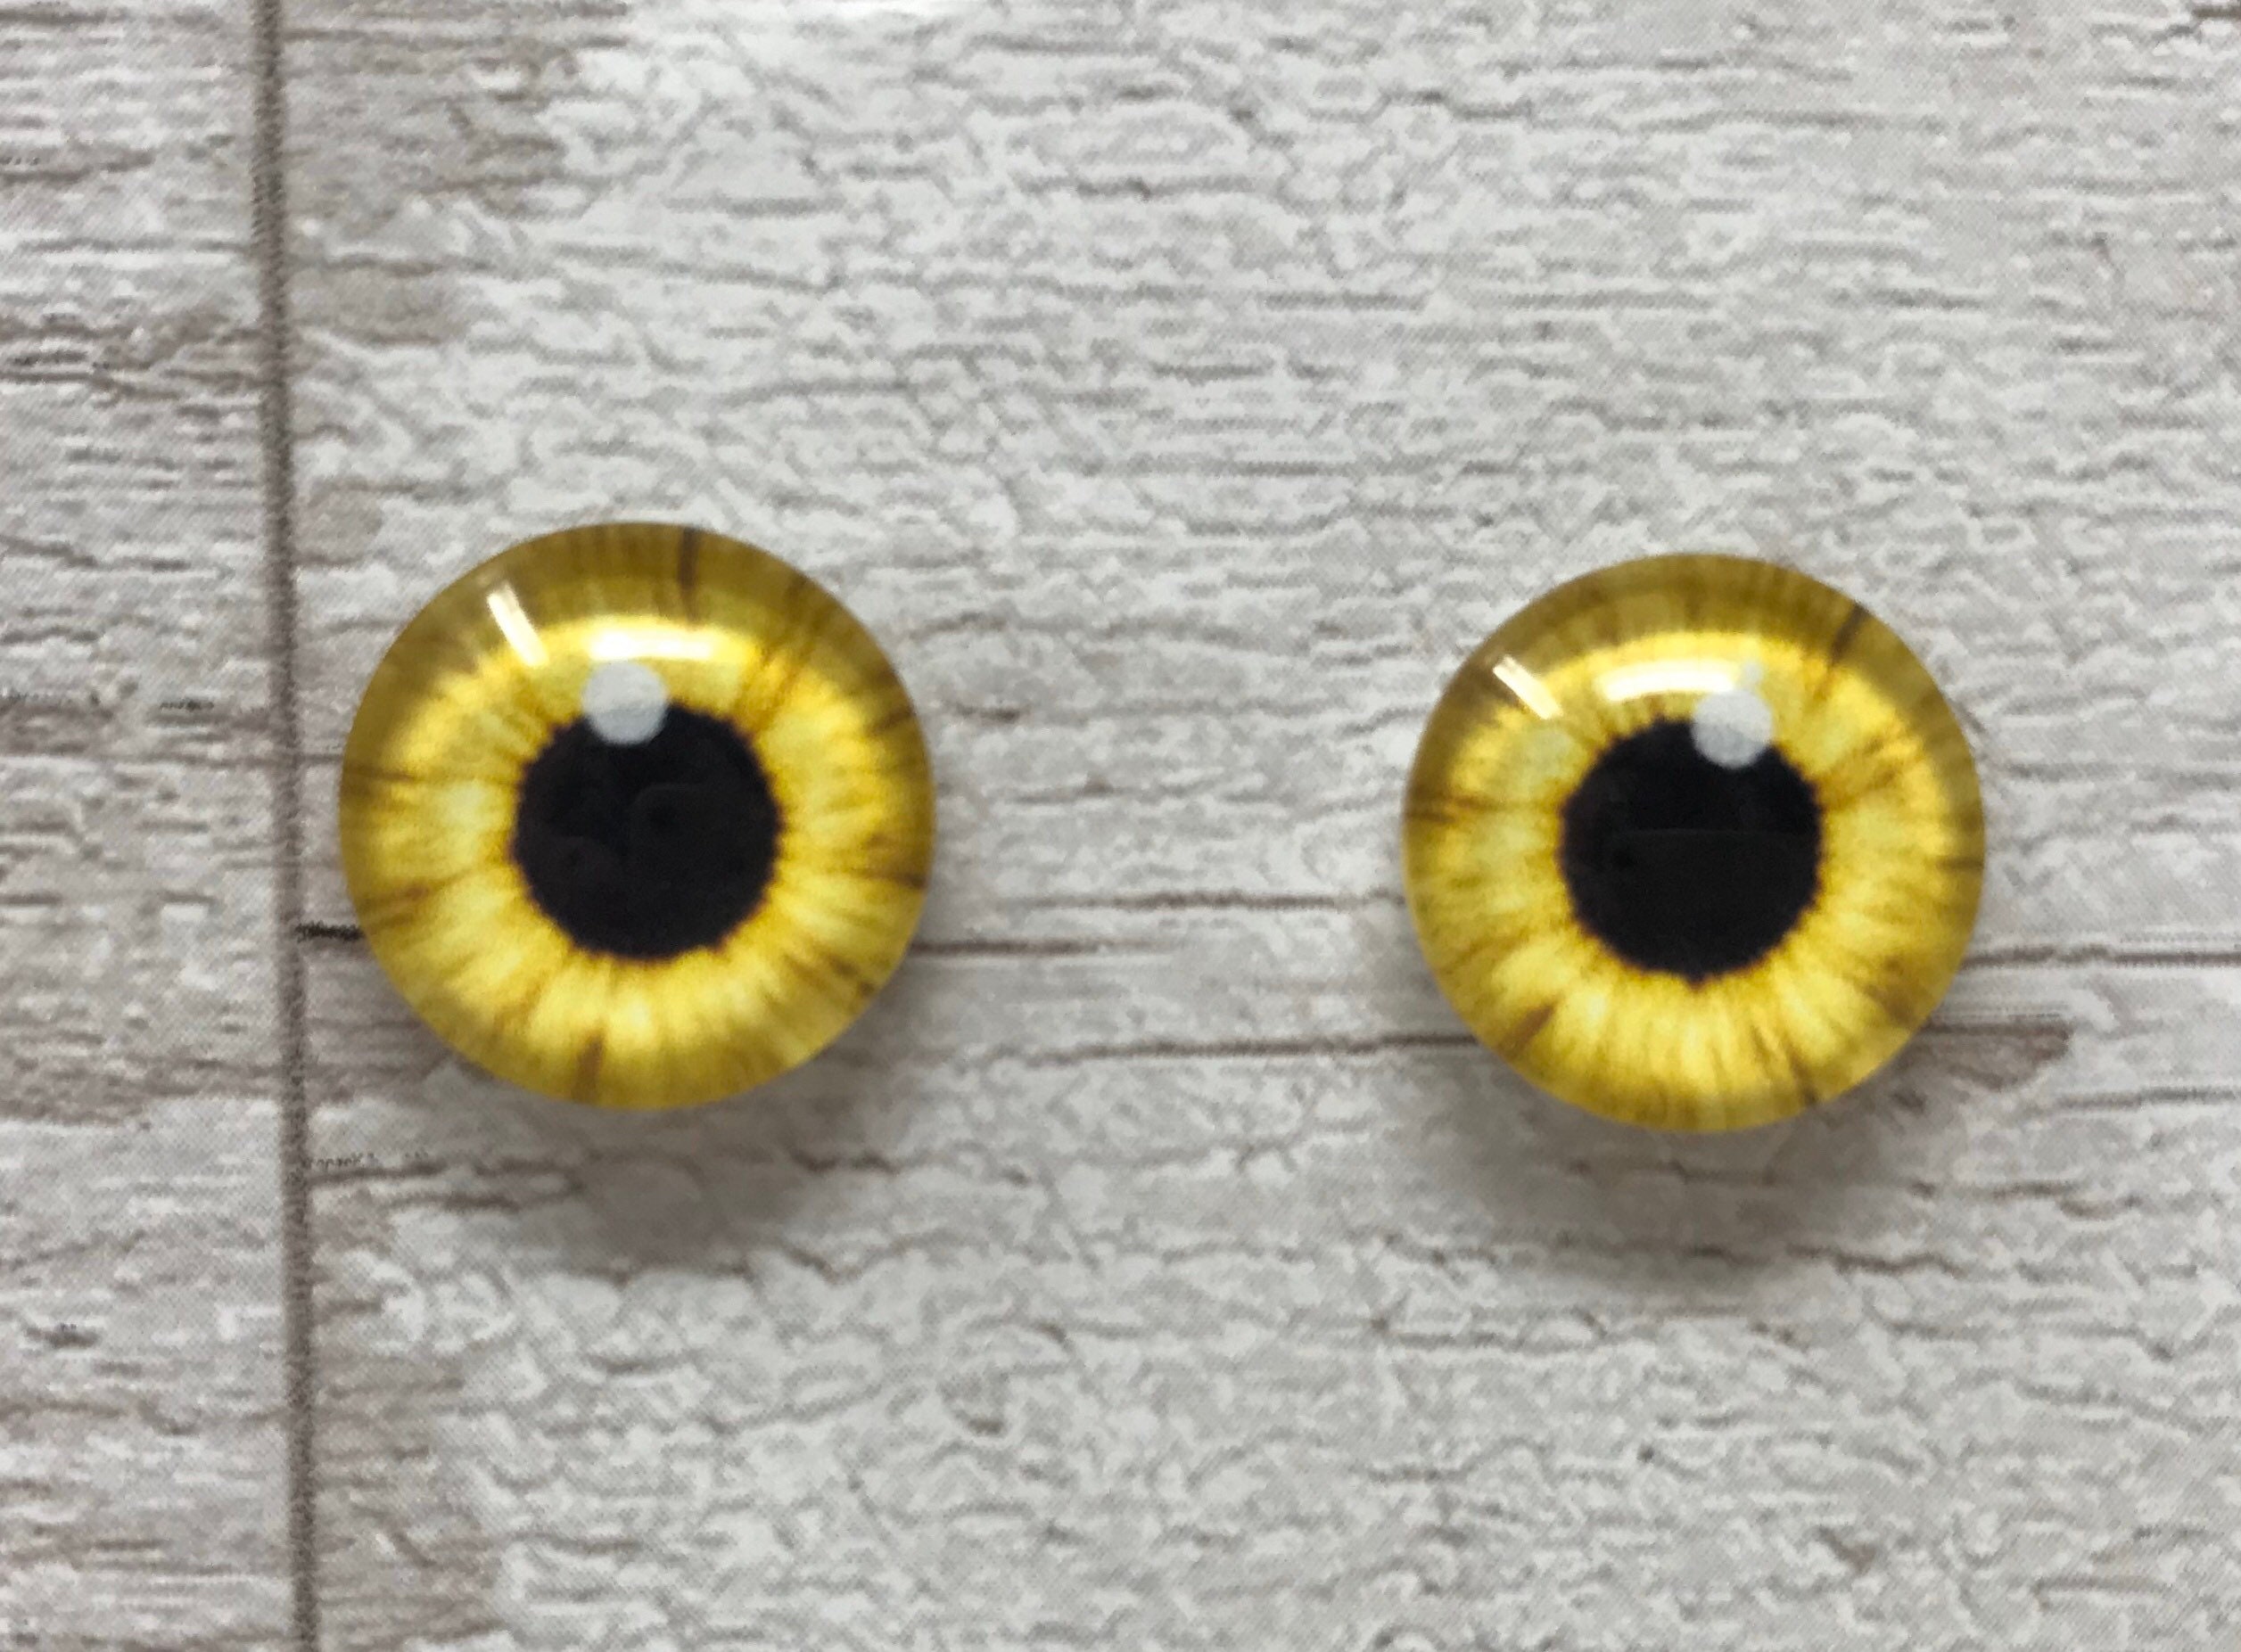 9 Mm Amigurumi Eyes Animal Eyes Craft Plastic Eyes Safety Eyes 10 PAIRS  Sampler Mixed Colors 9A 